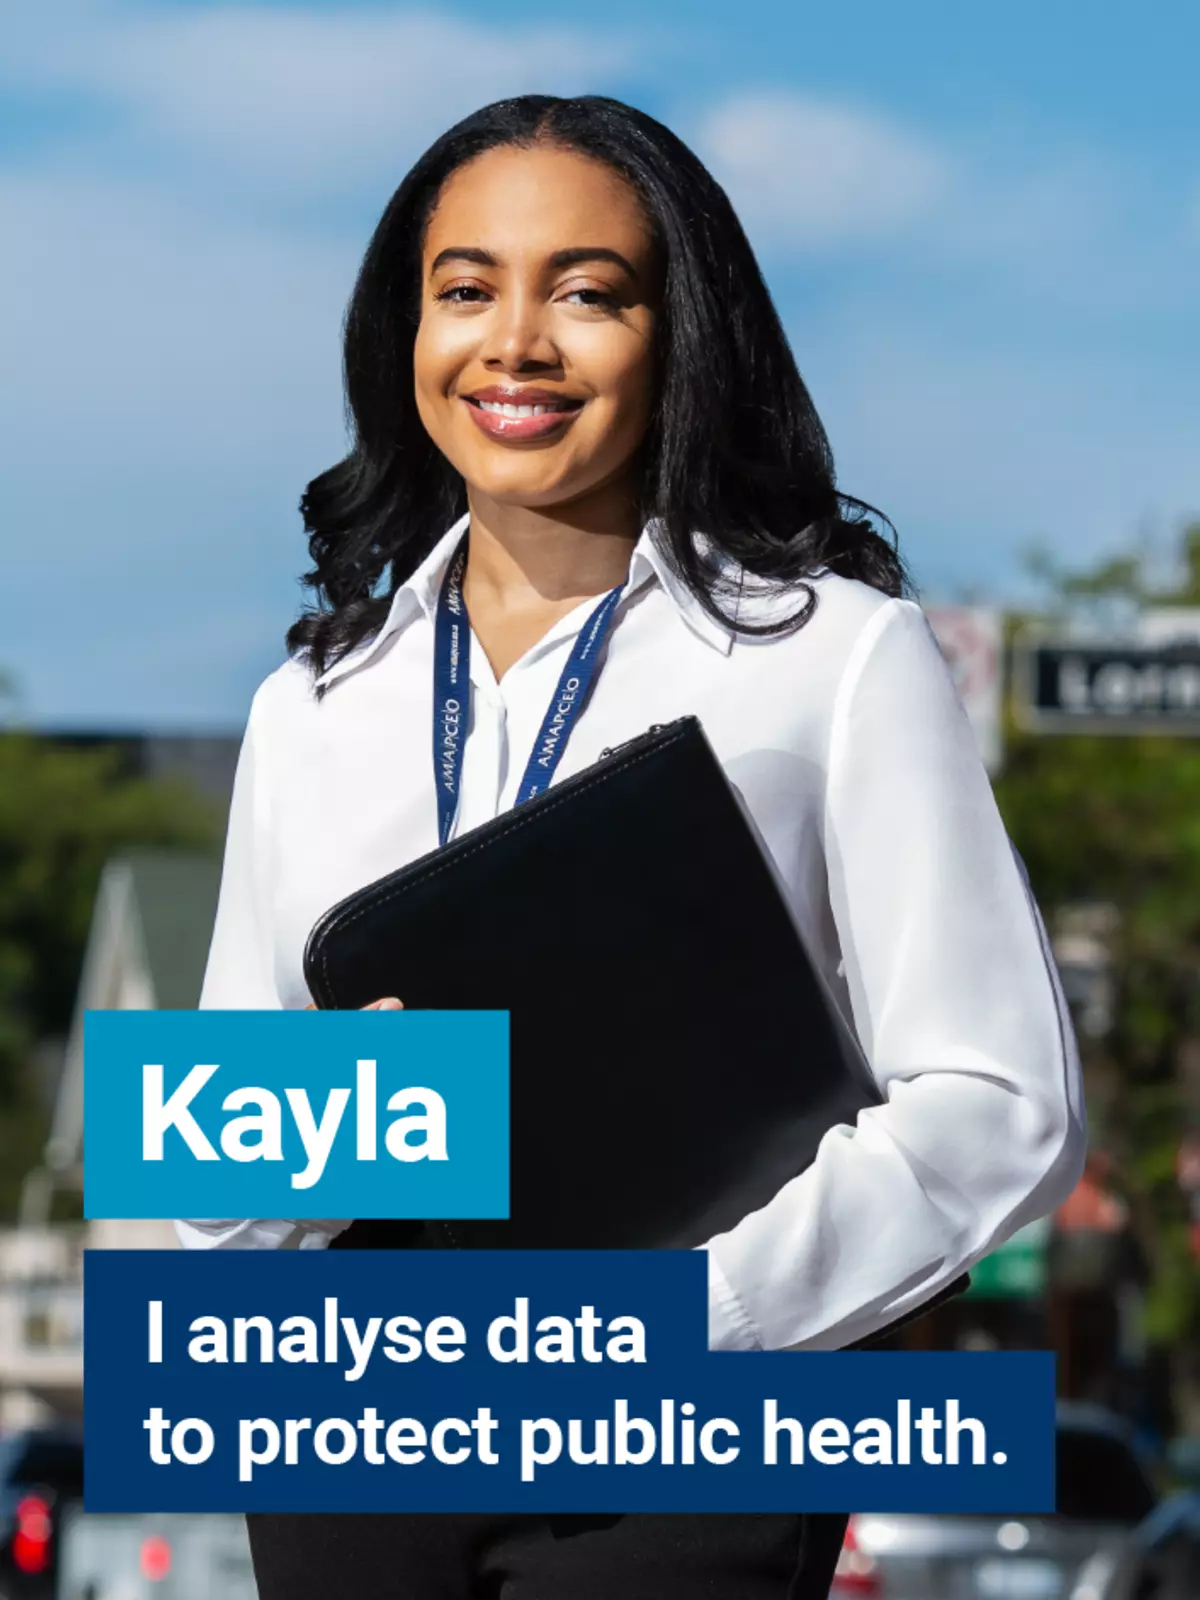 "Kayla - I analyze data to protect public health" AMAPCEO member Kayla, an epidemiologist 